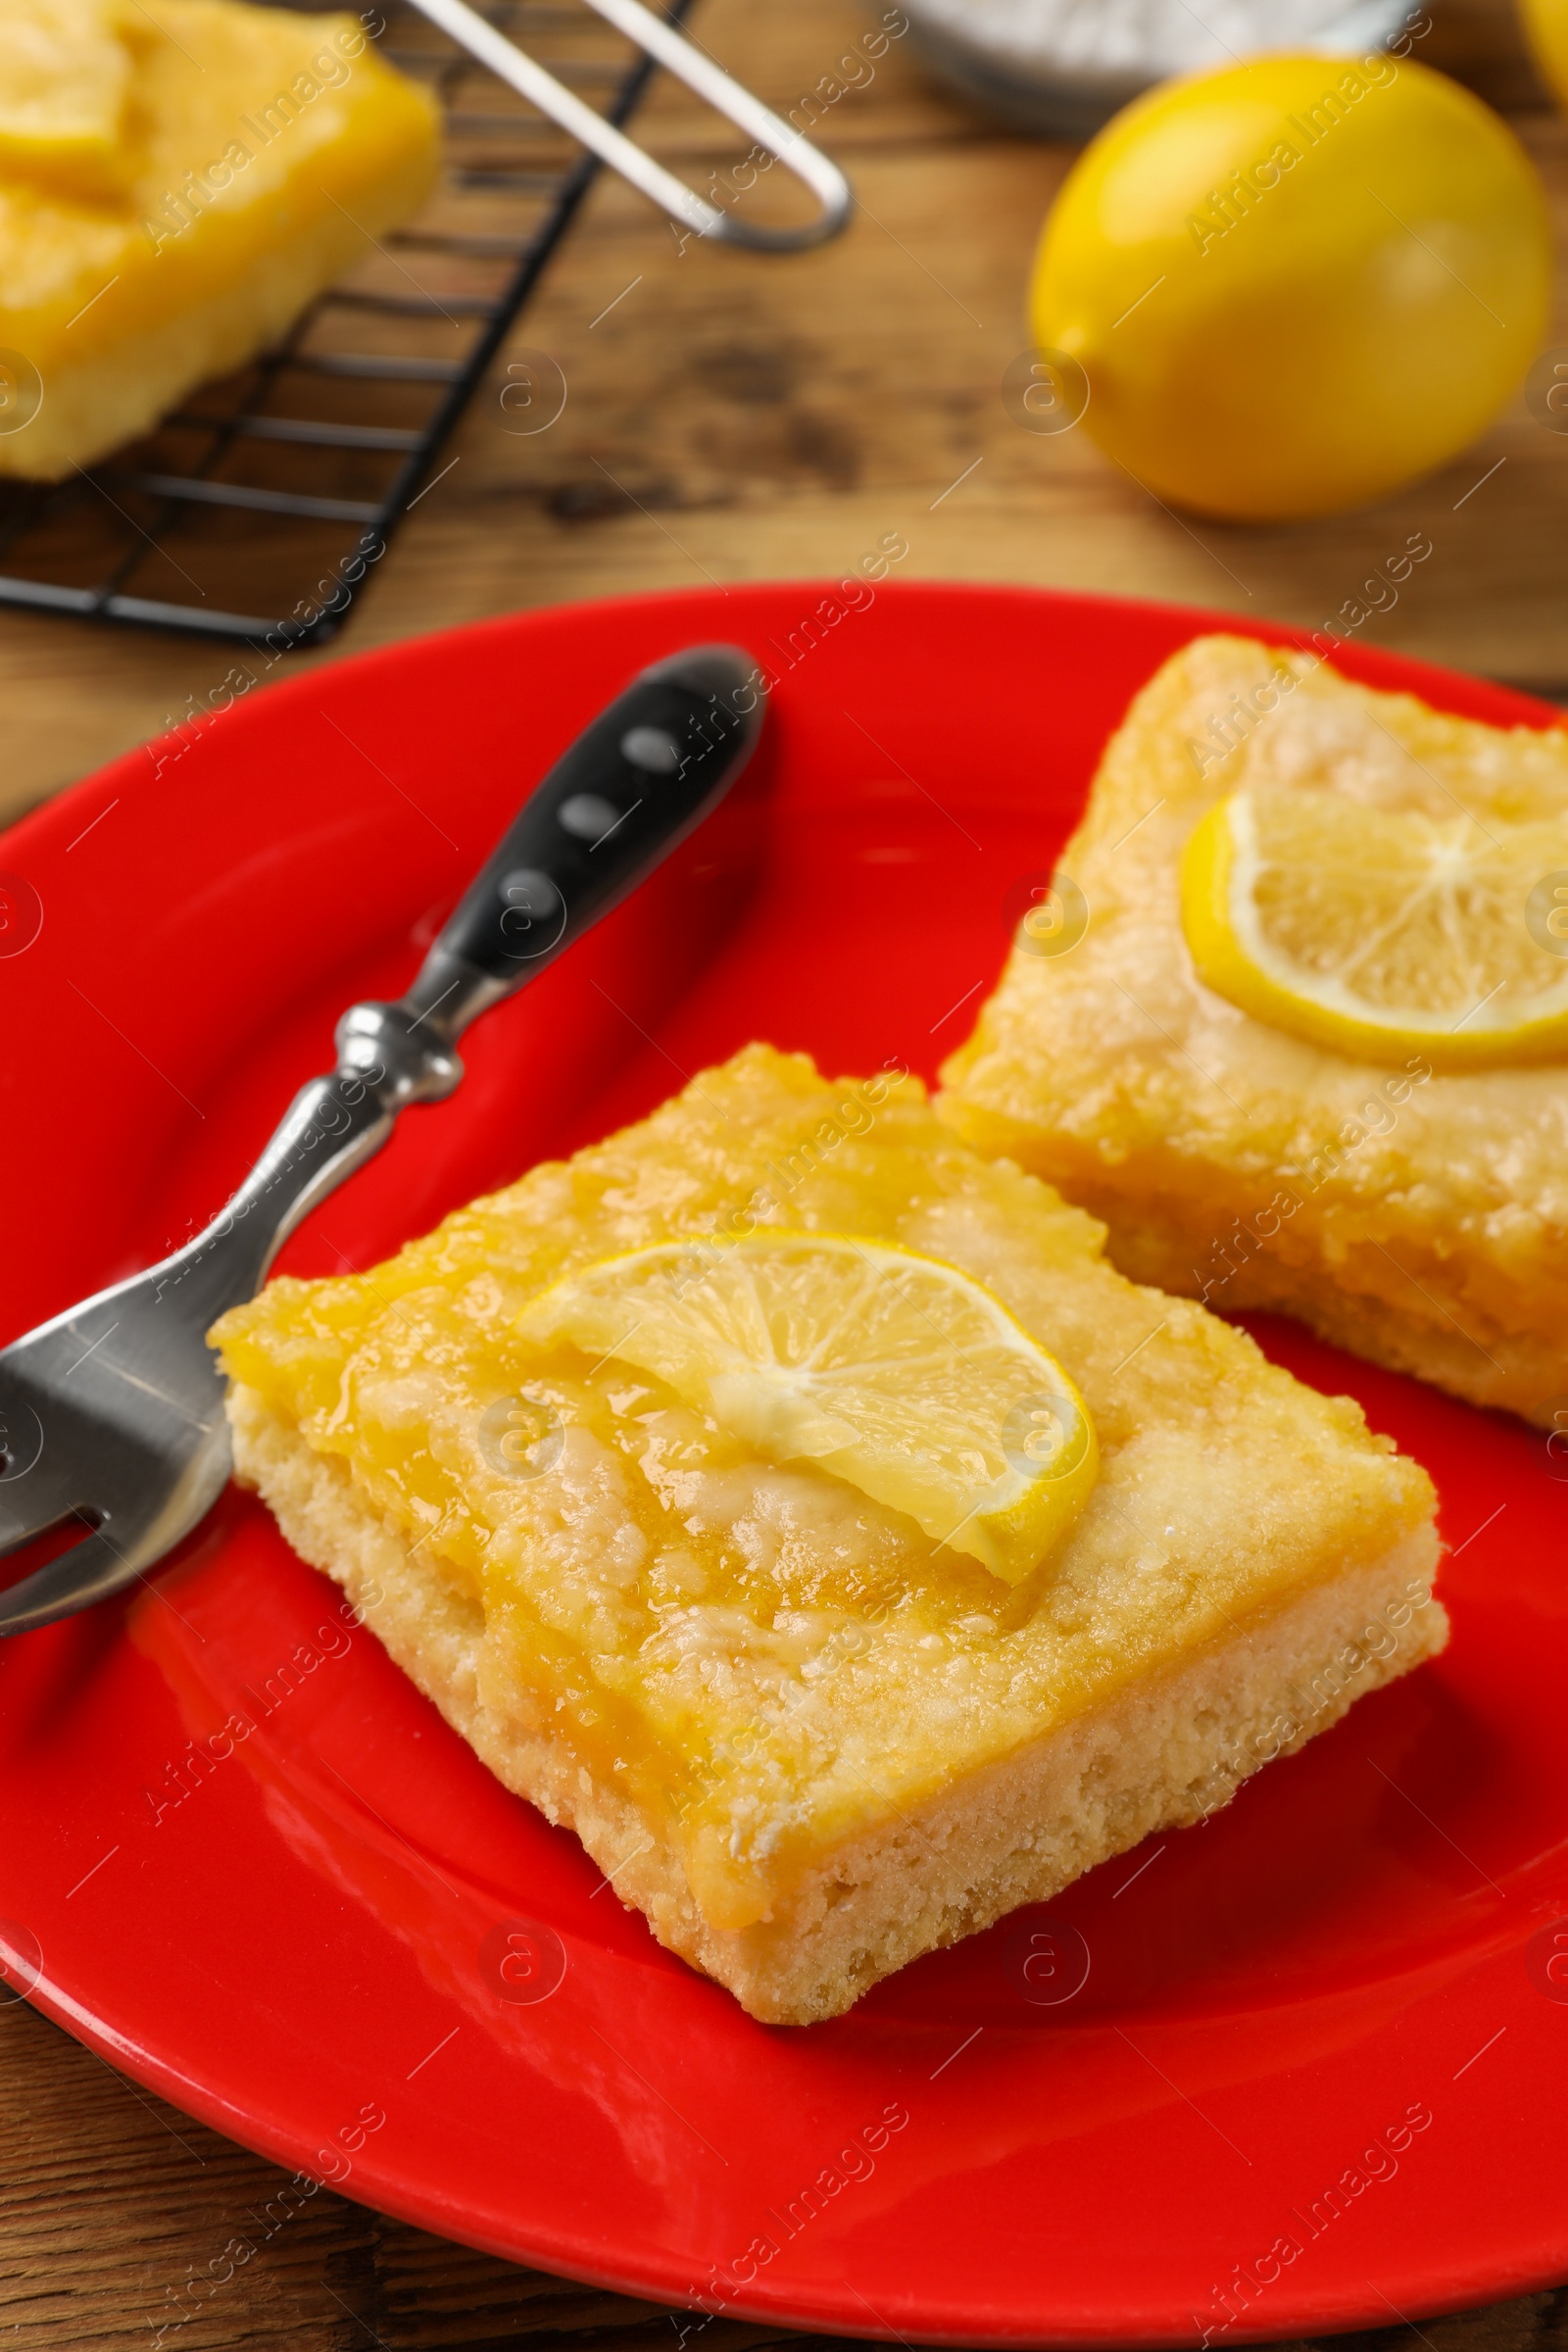 Photo of Tasty lemon bars and fork on table, closeup